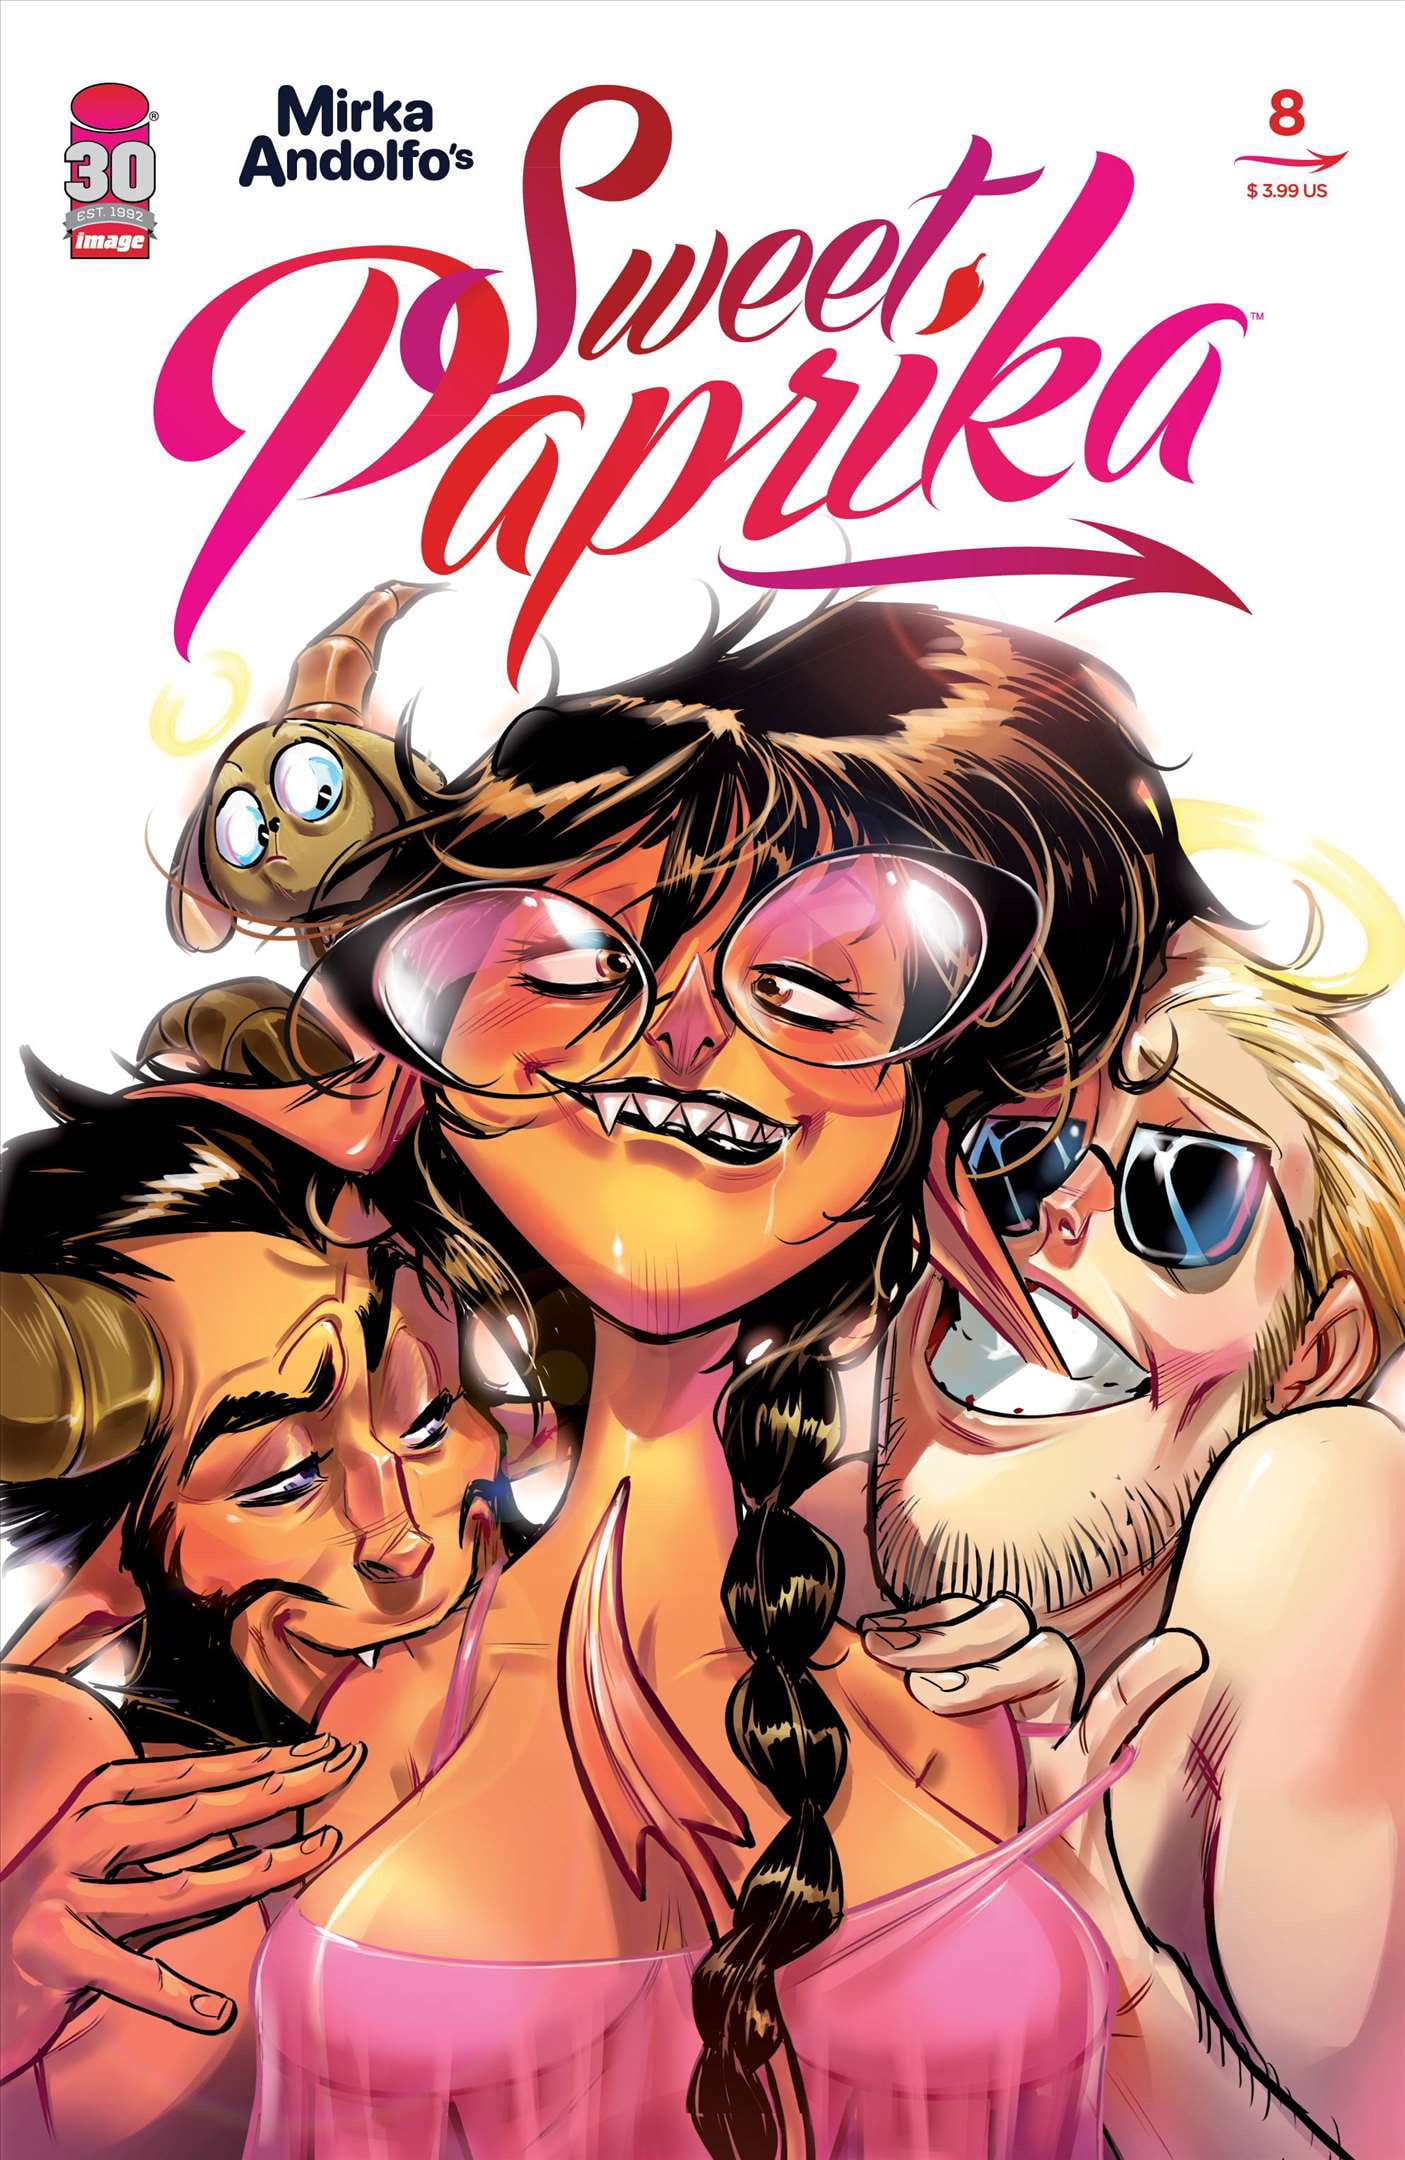 Sweet Paprika (Mirka Andolfo's ) #8B VF ; Image Comic Book - Walmart.com